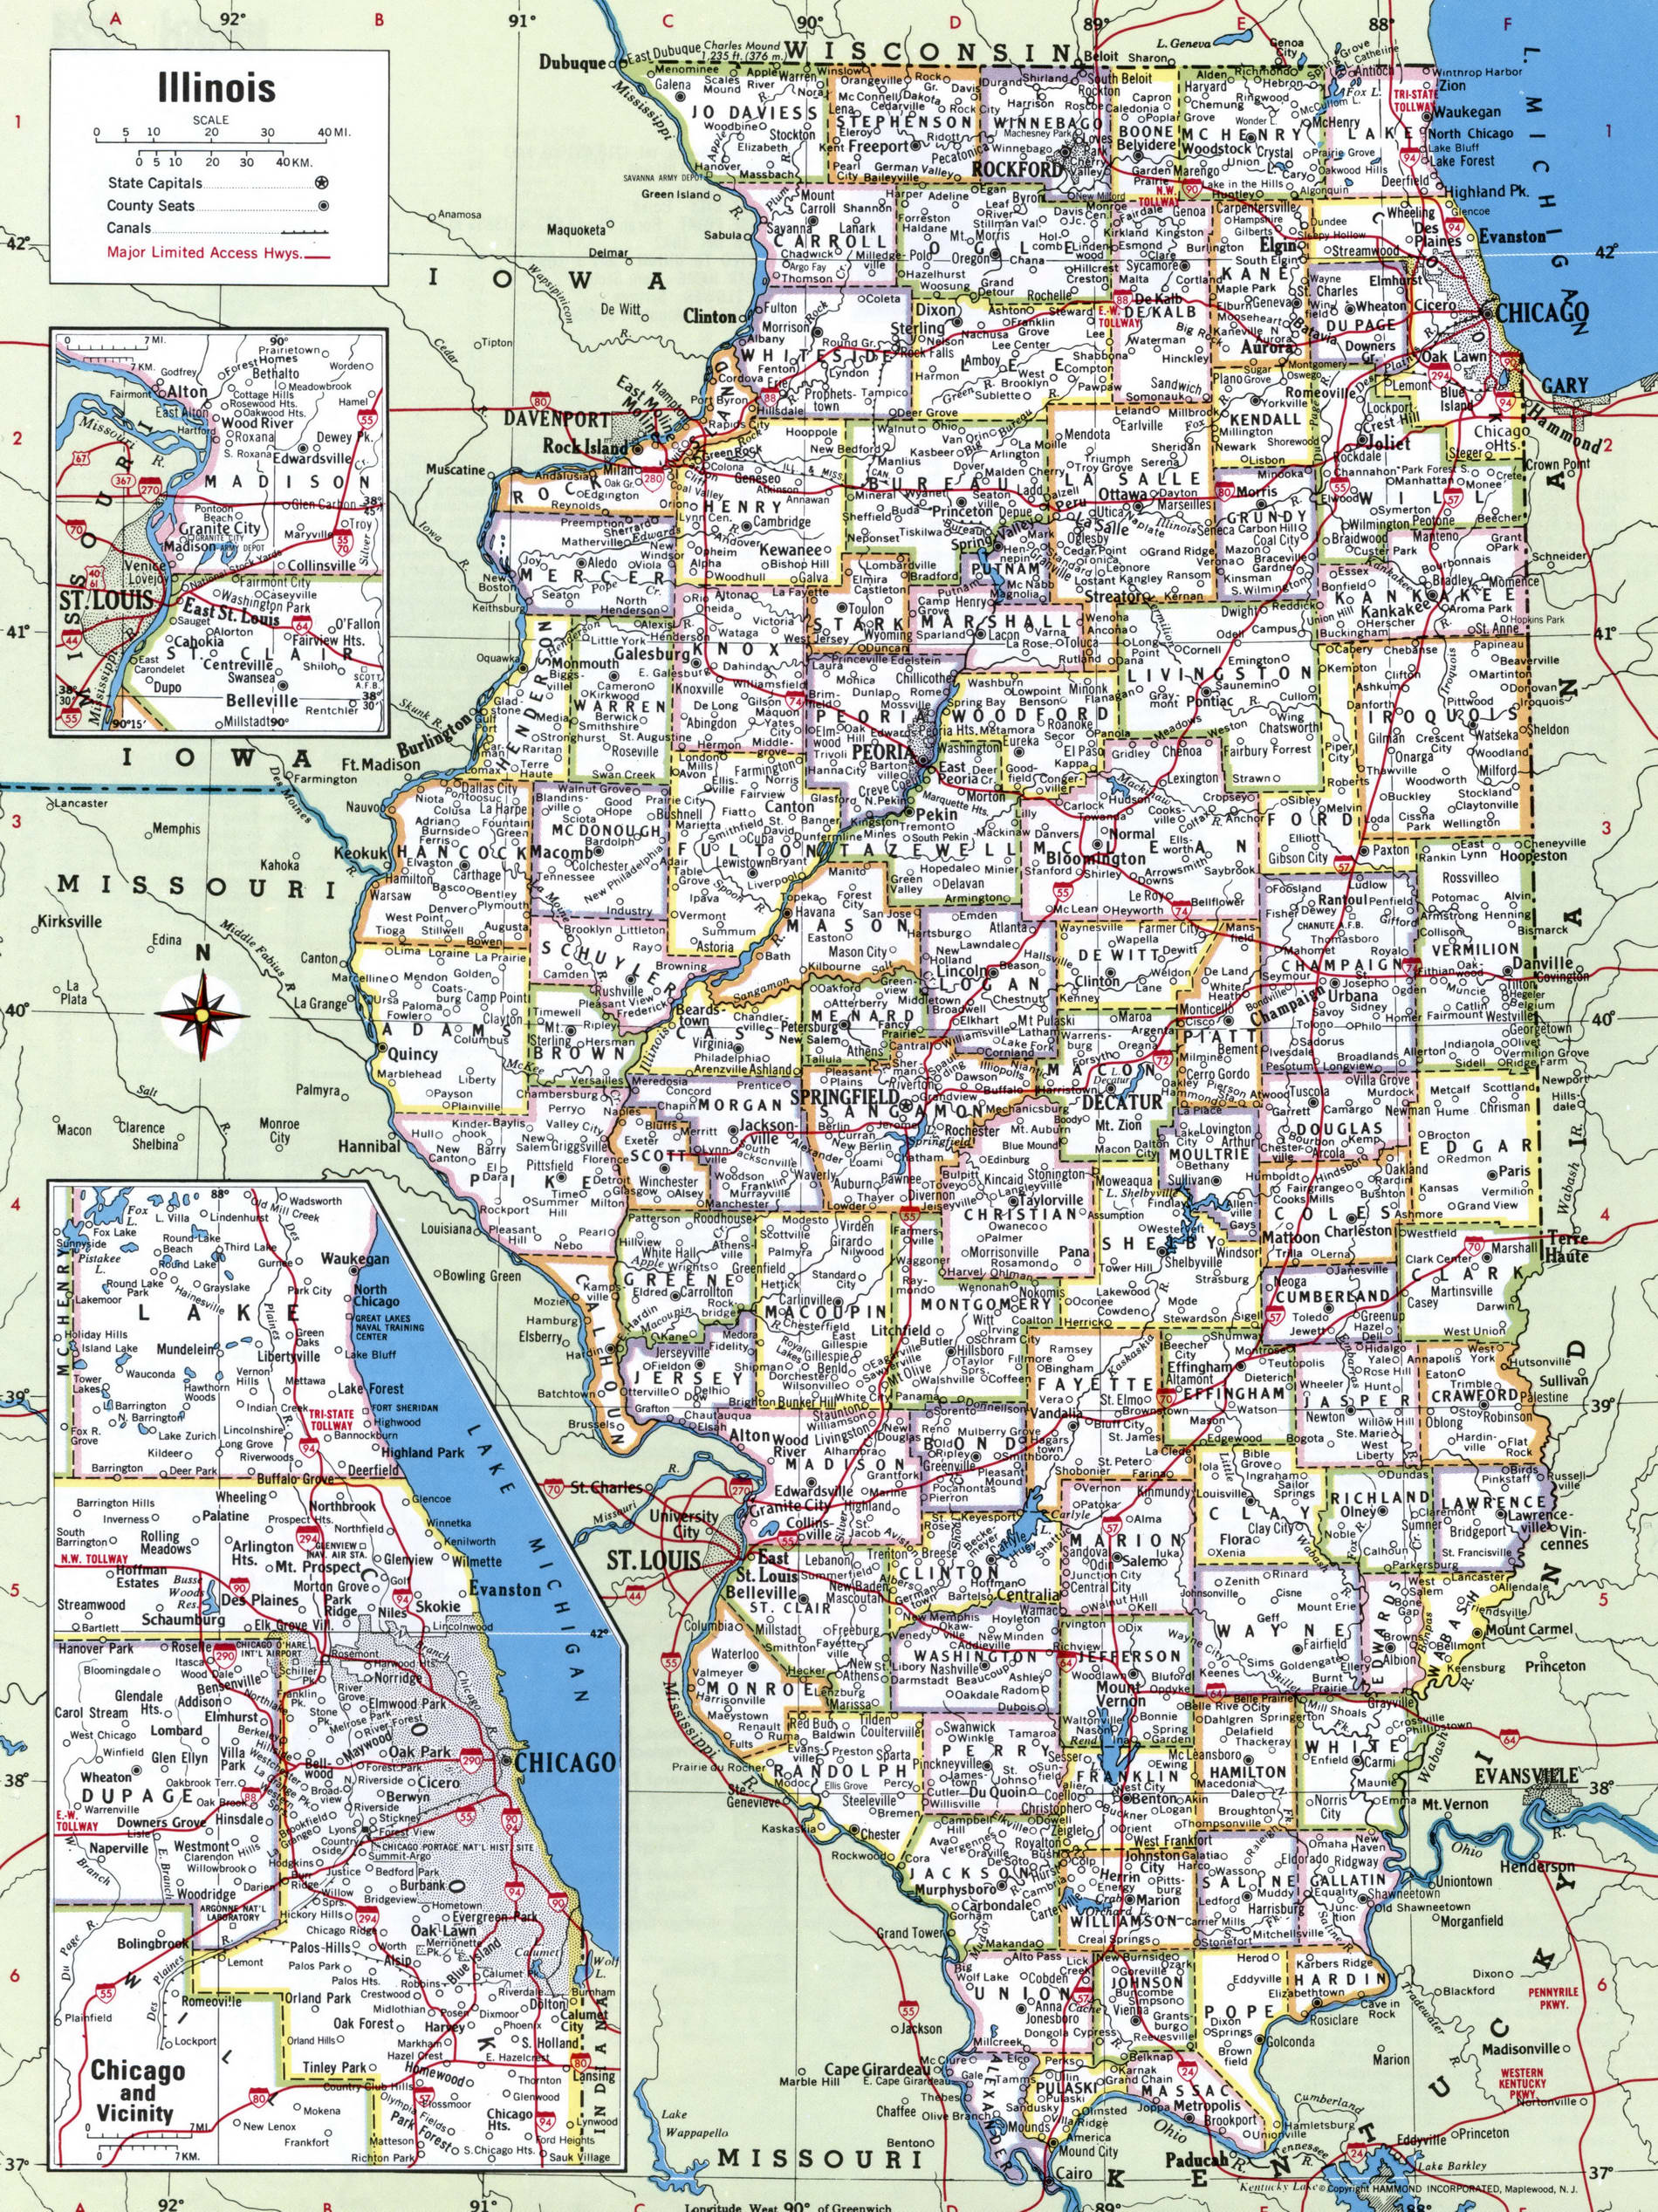 Illinois counties map